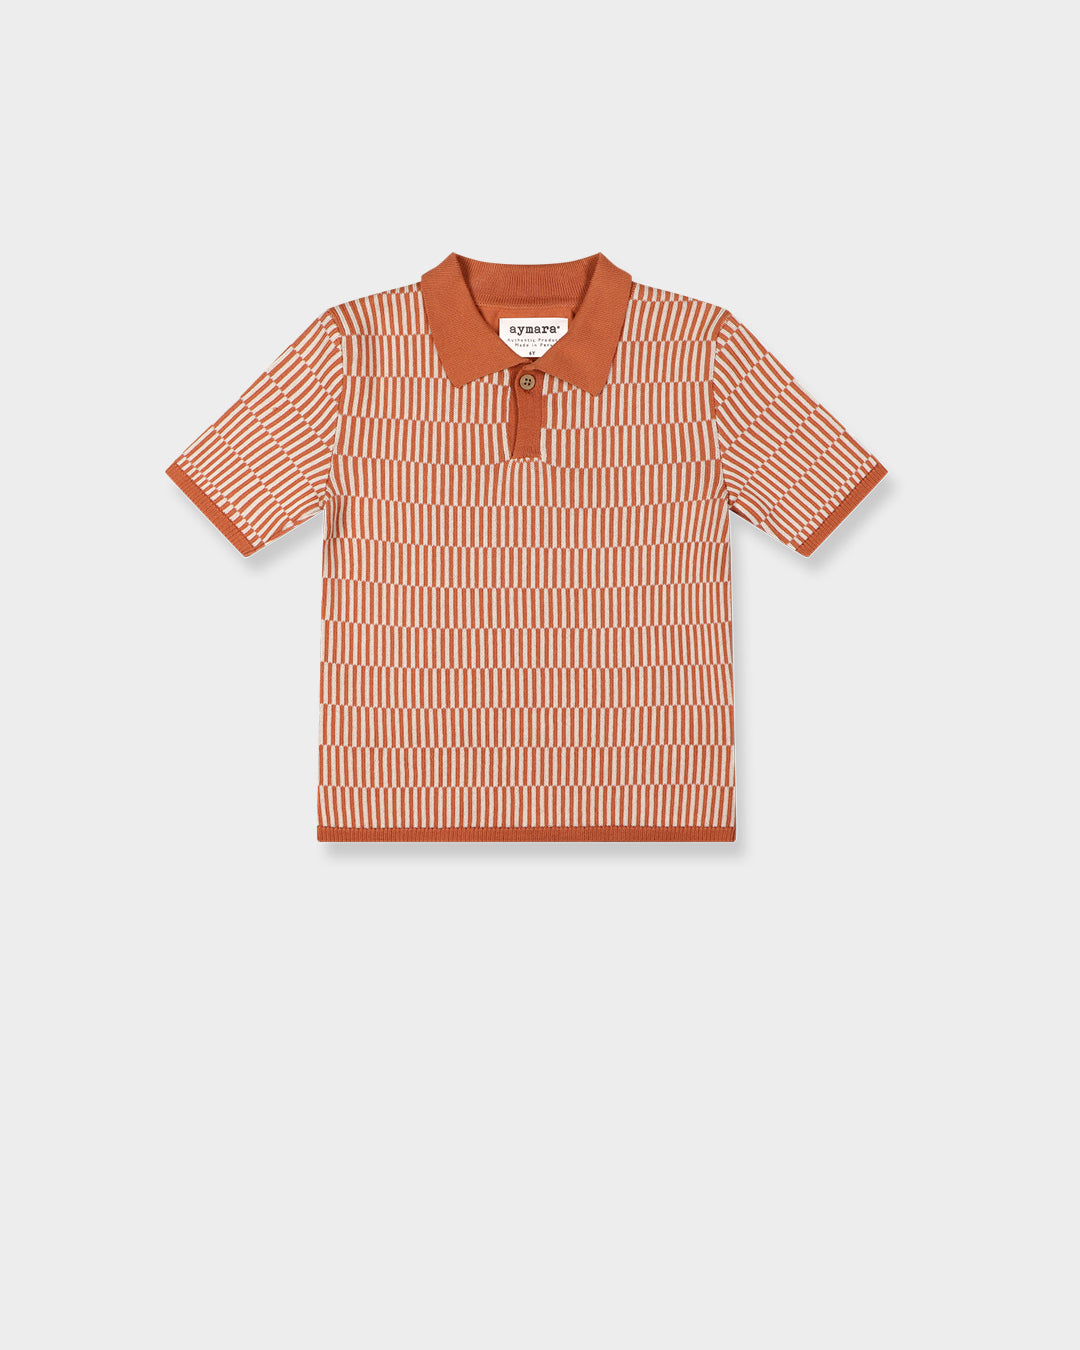 Jacquard knit polo shirt Abel, made of organic cotton.  Copper colour.